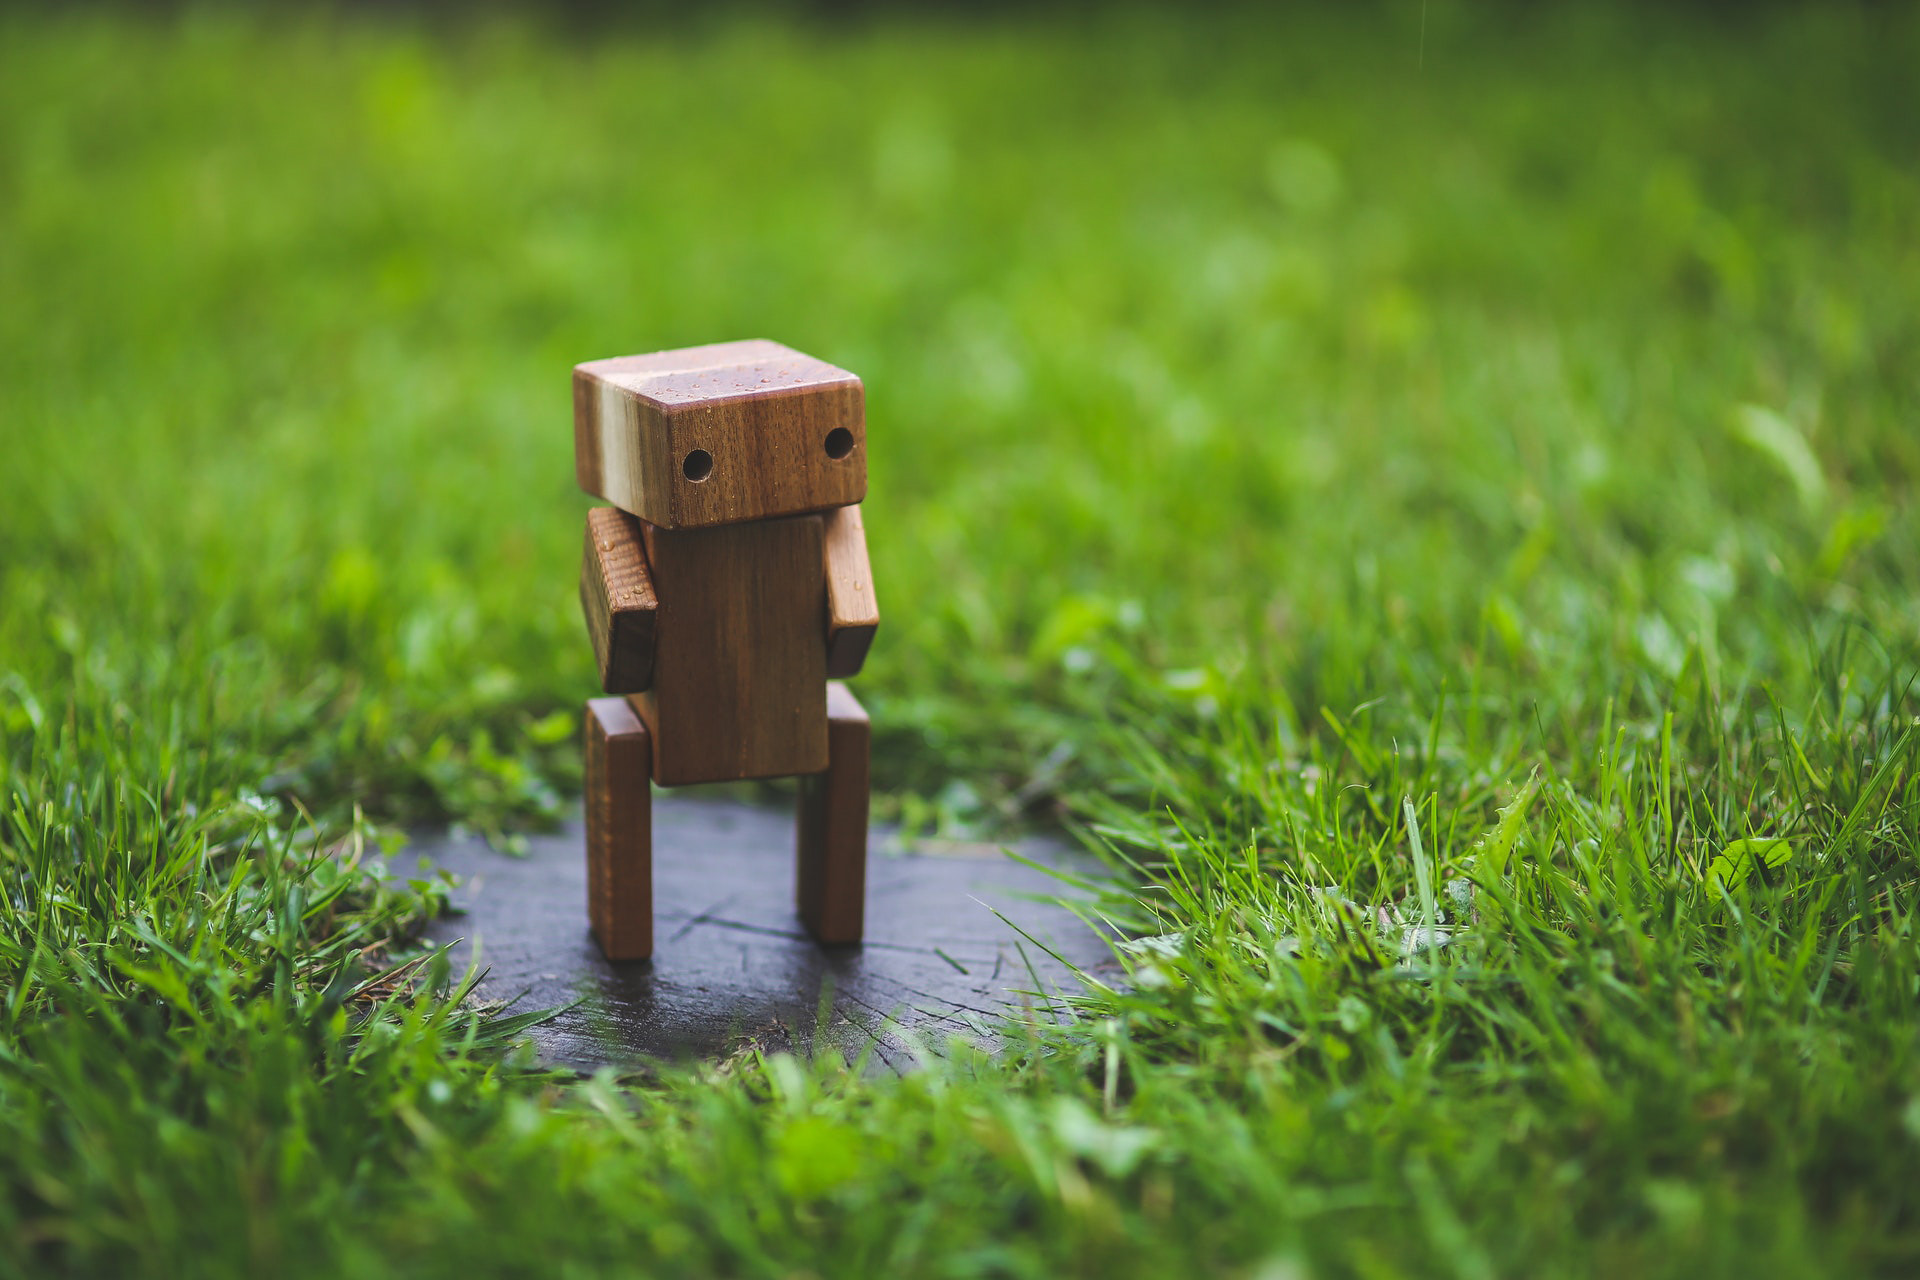 A Tiny Wooden Robot figurine